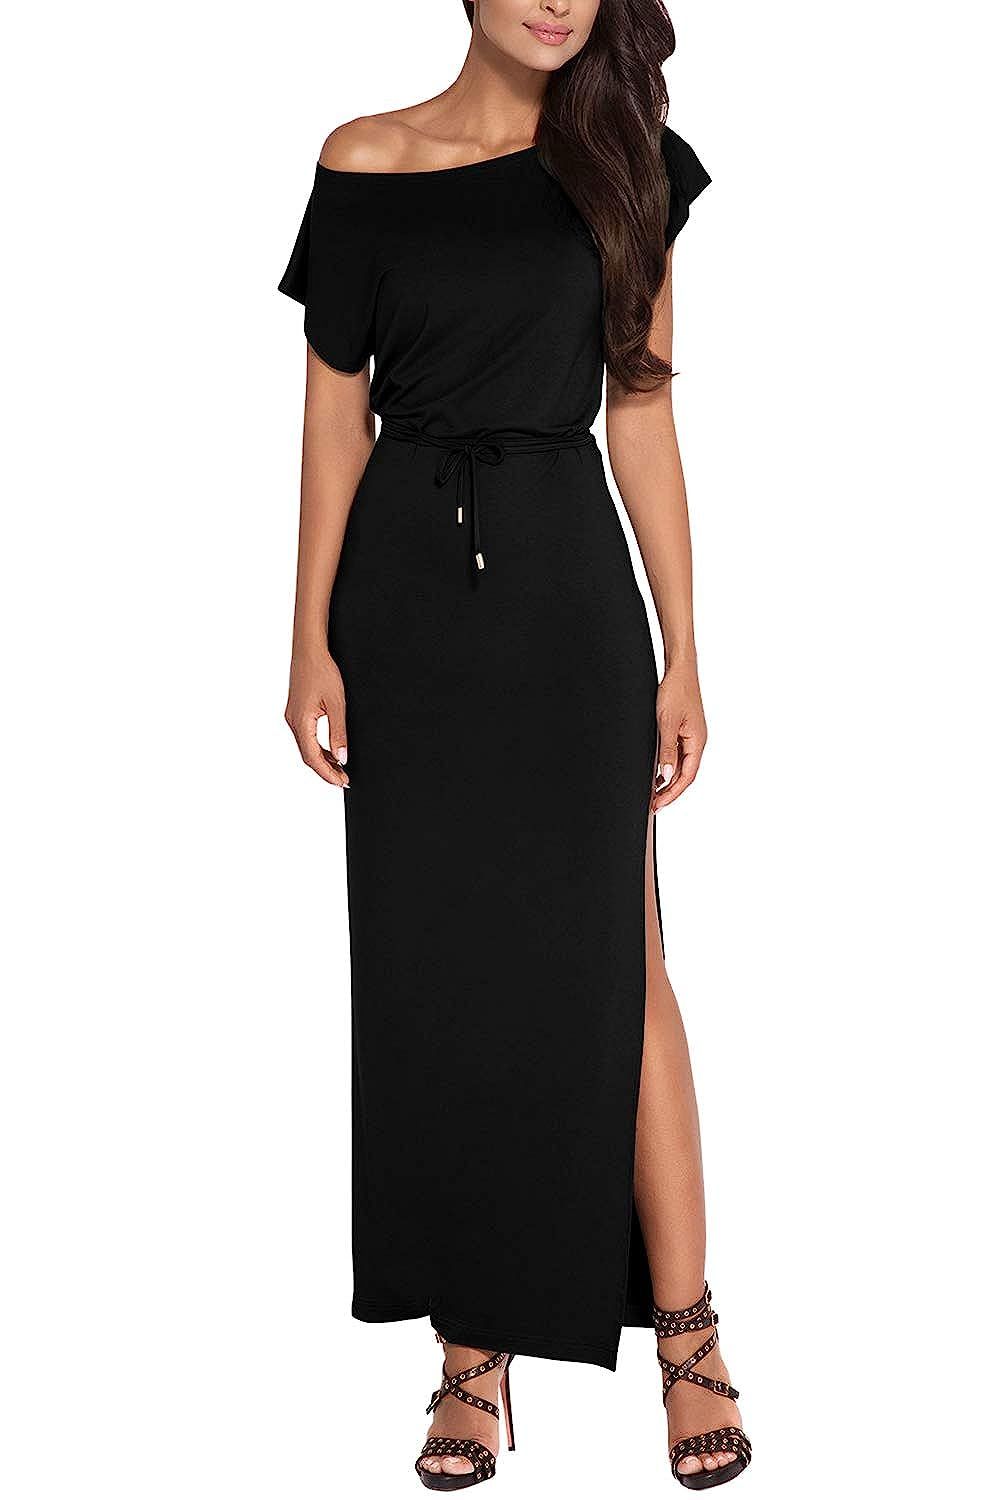 Meenew Women's Casual Short Sleeve Off Shoulder Cotton Side Slit Maxi Dress | Amazon (US)